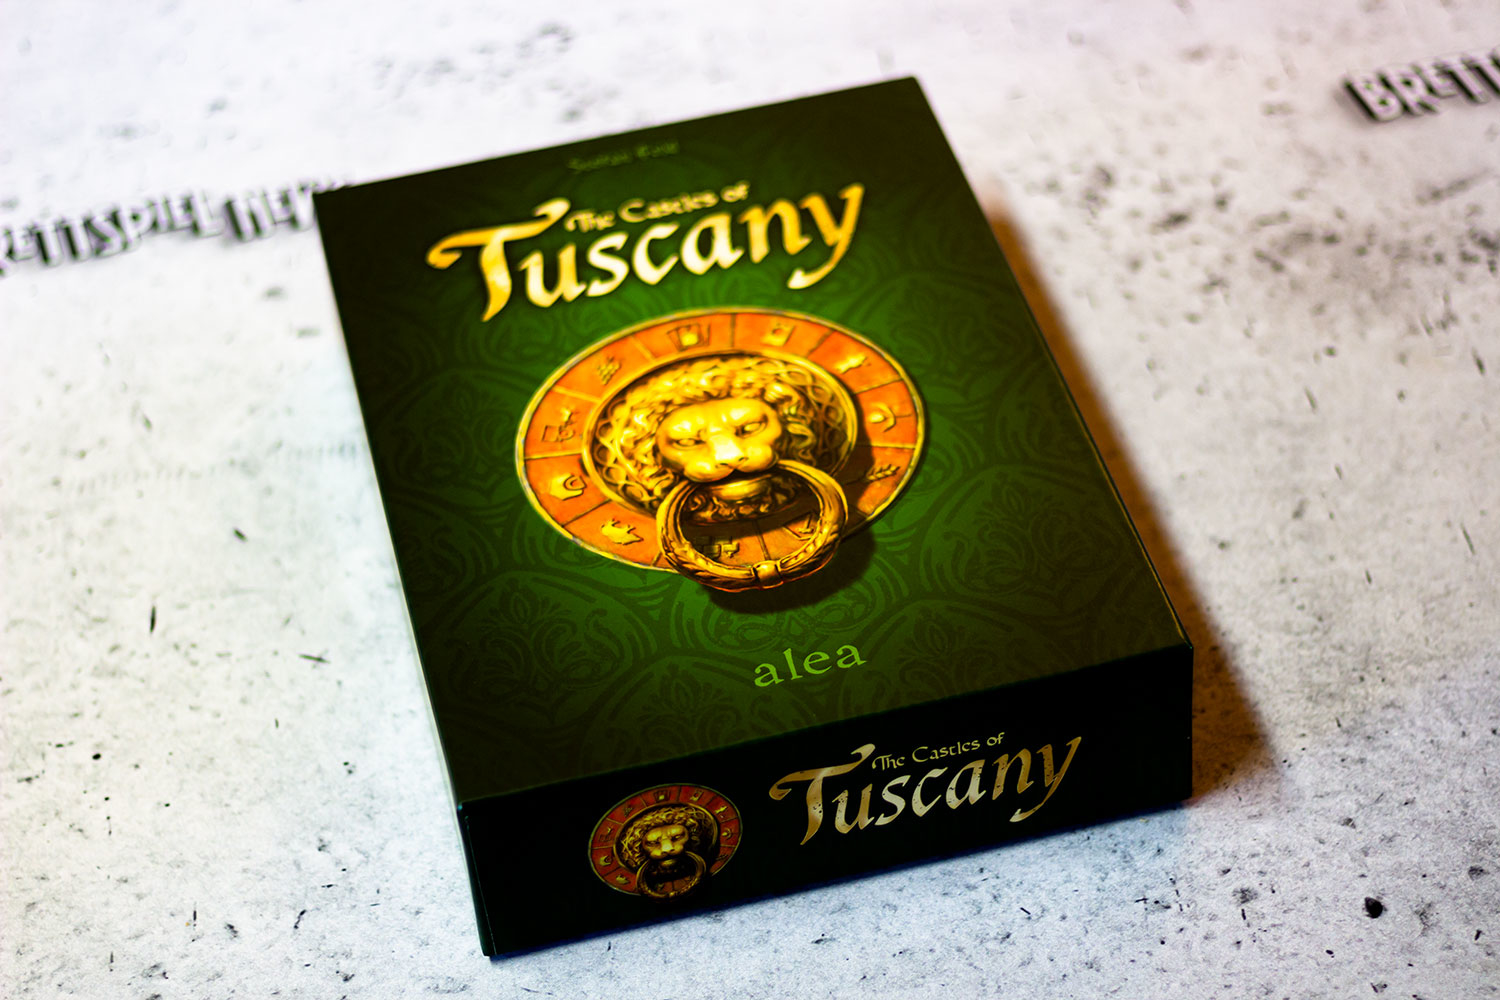 THE CASTLES OF TUSCANY // Bilder vom Spiel